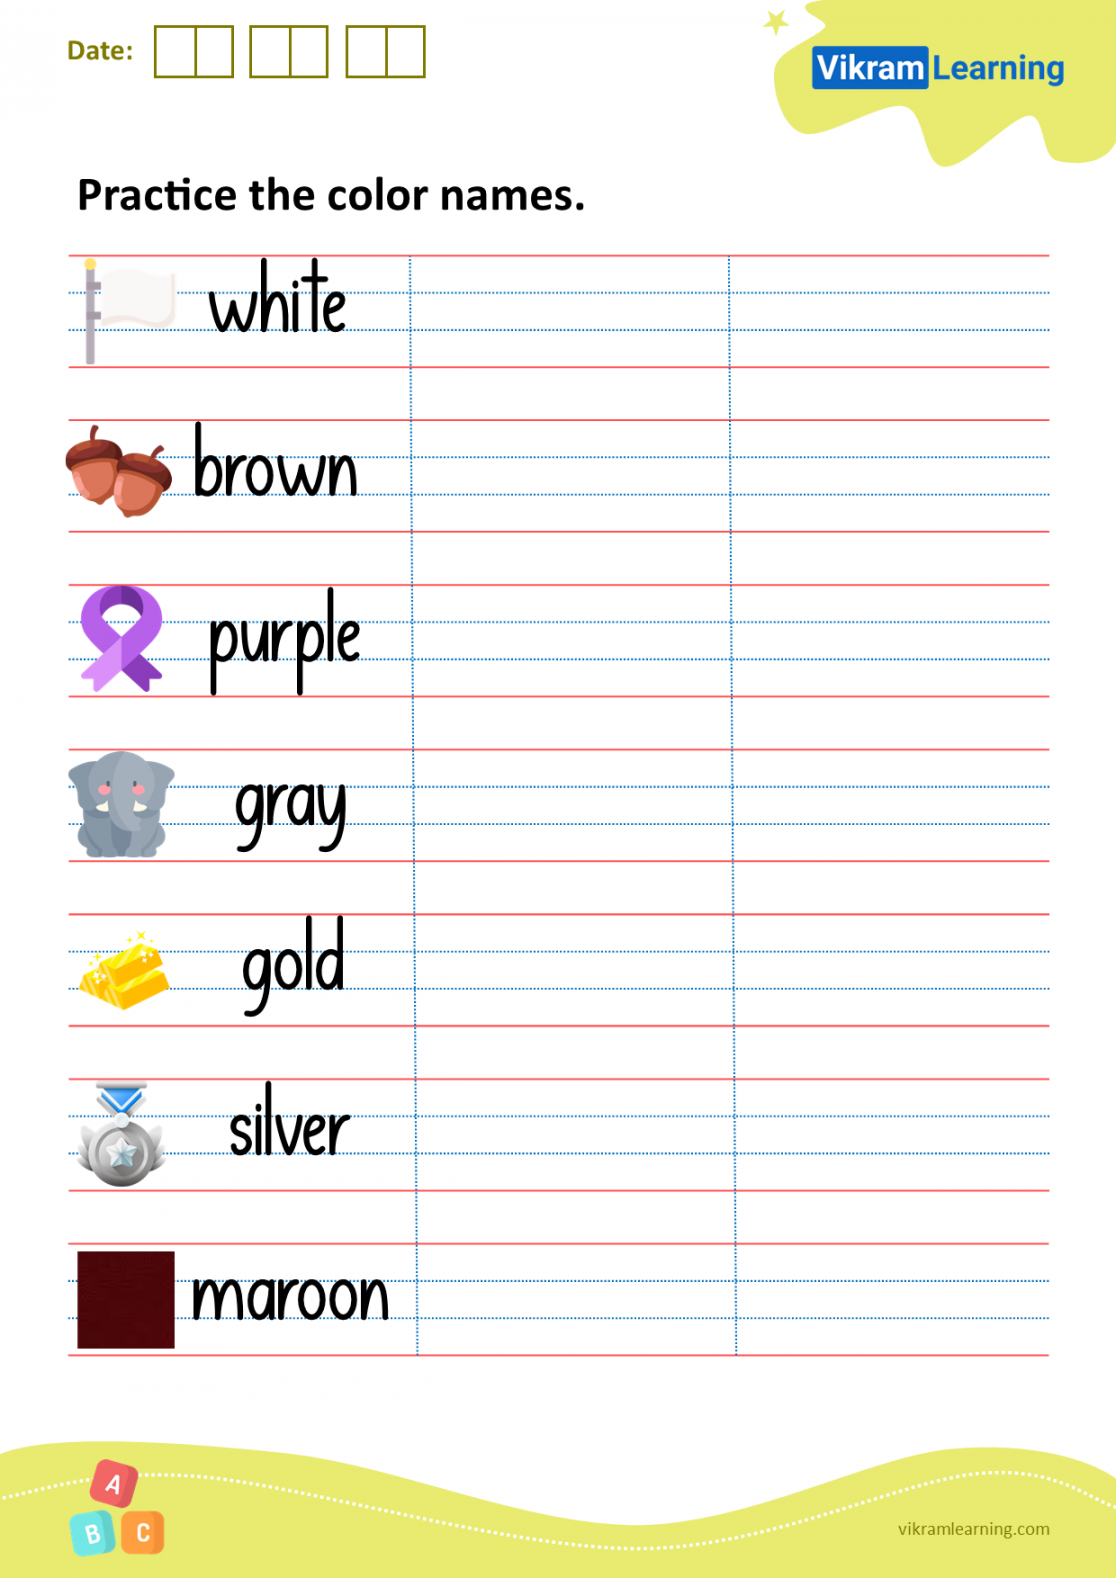 Download practice the color names worksheets  vikramlearning